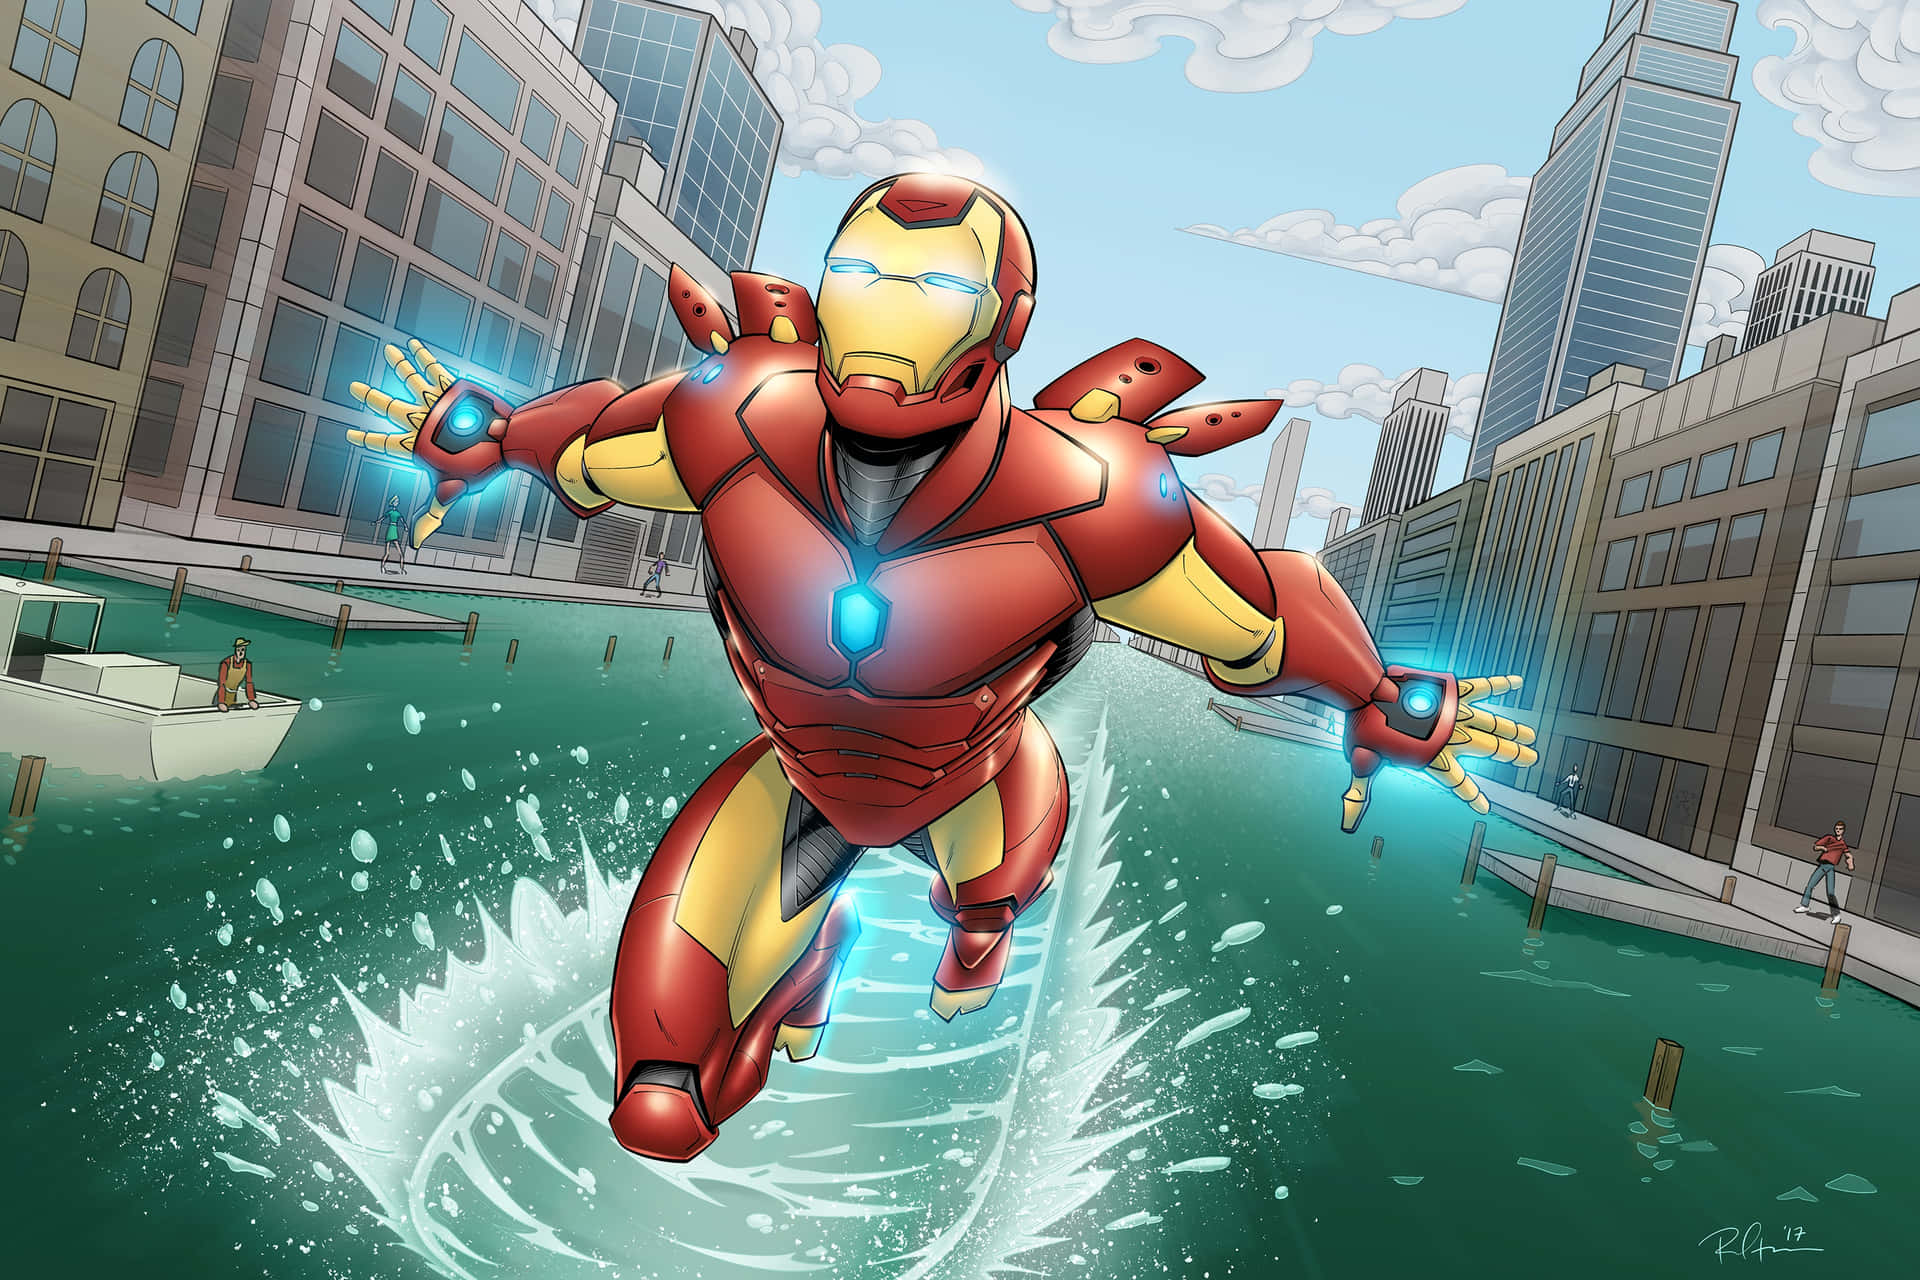 Tony Stark suits up as Iron Man.